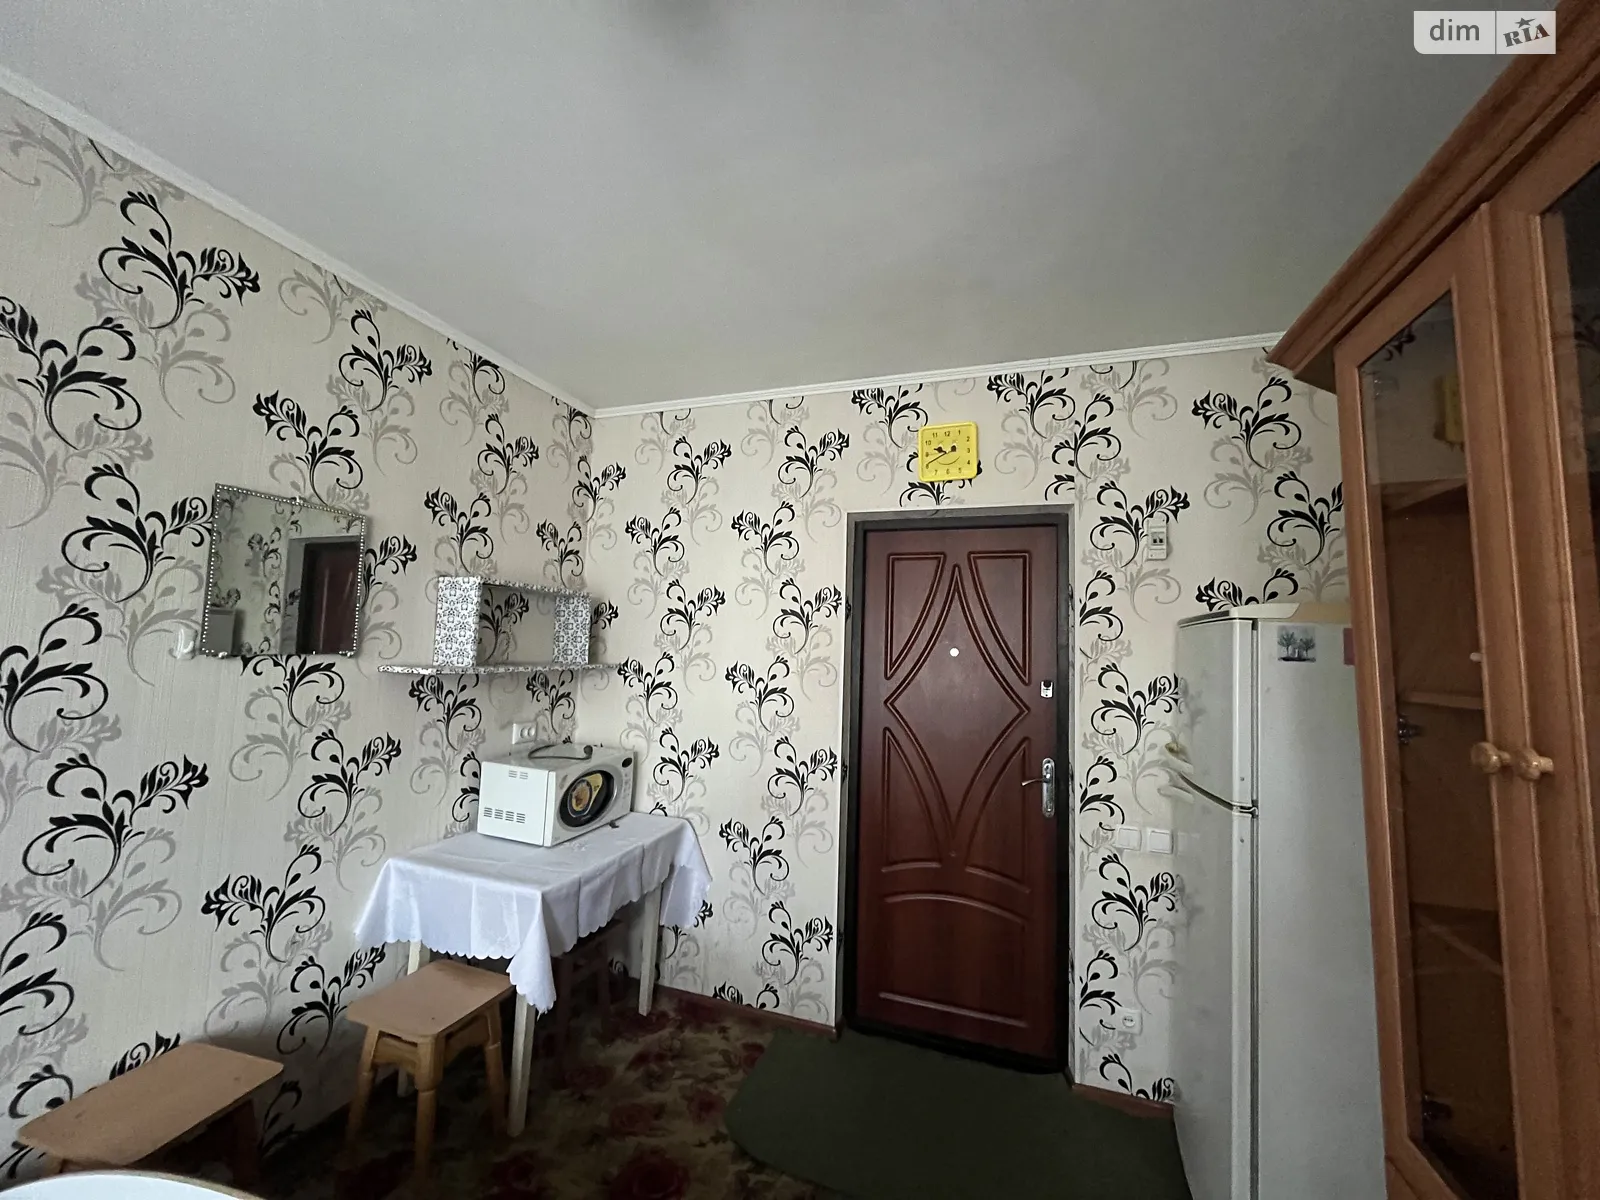 Продается комната 25 кв. м в Виннице, цена: 13999 $ - фото 1